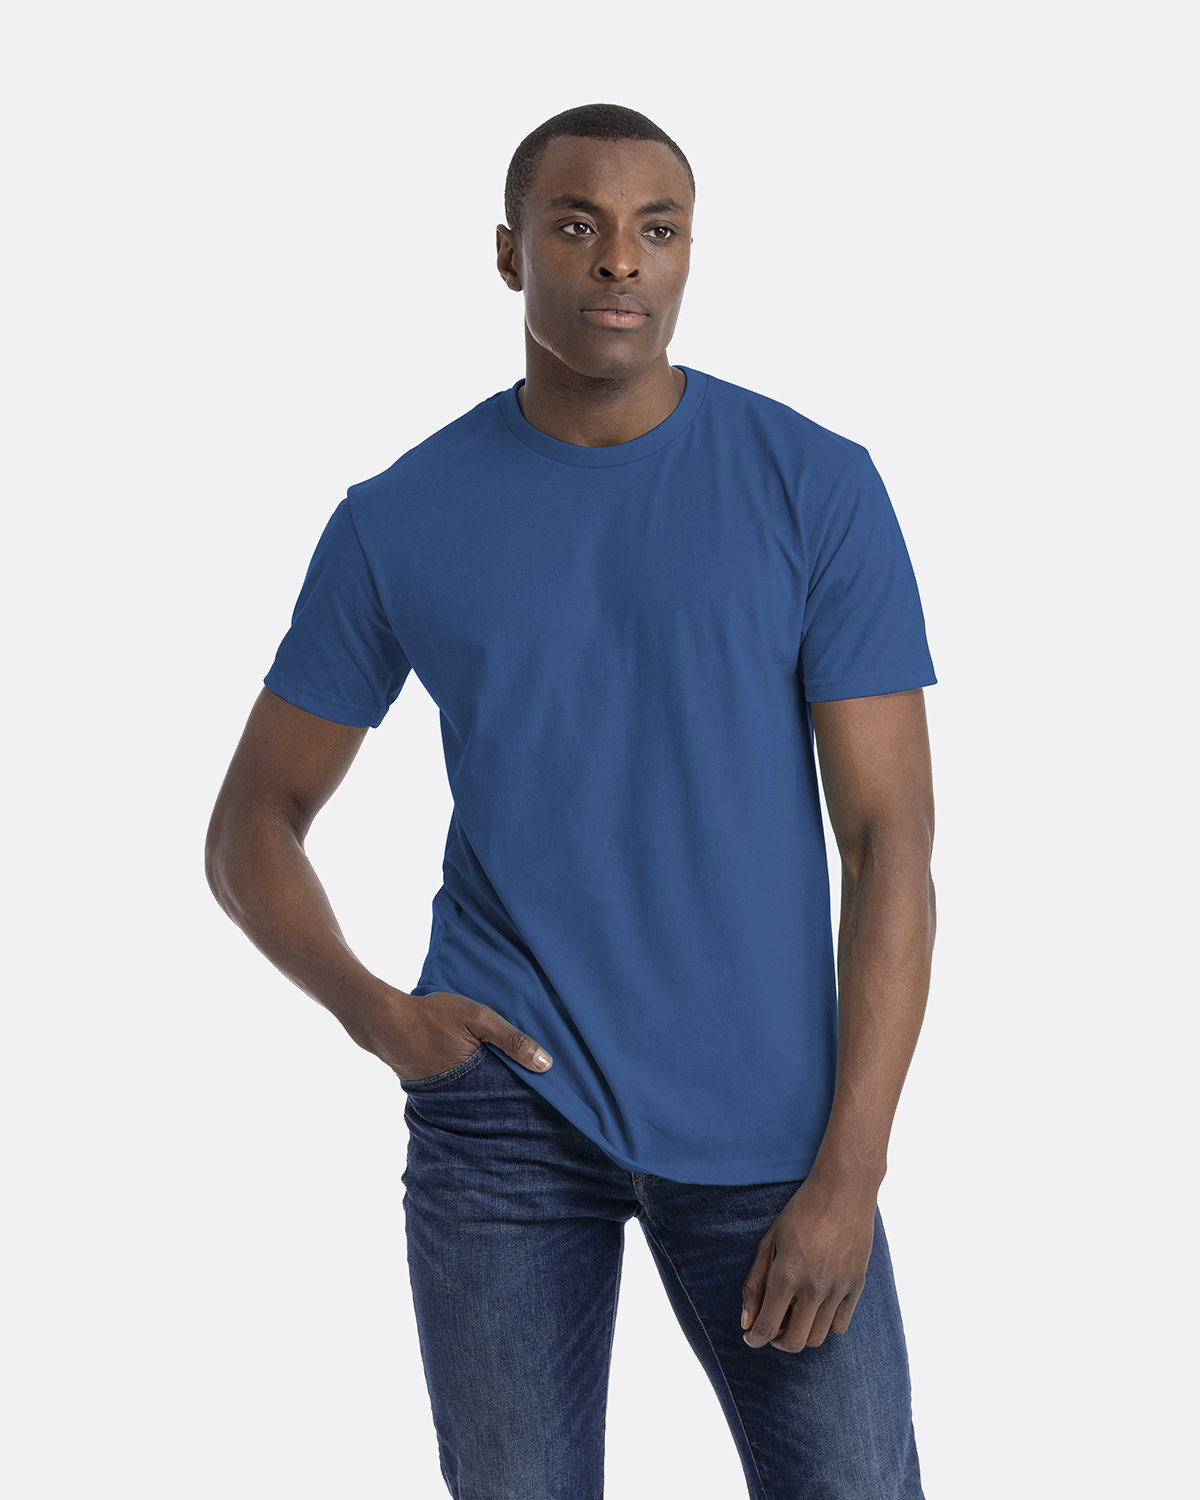 Next Level Apparel Unisex CVC Crewneck T-Shirt heather cool blu 